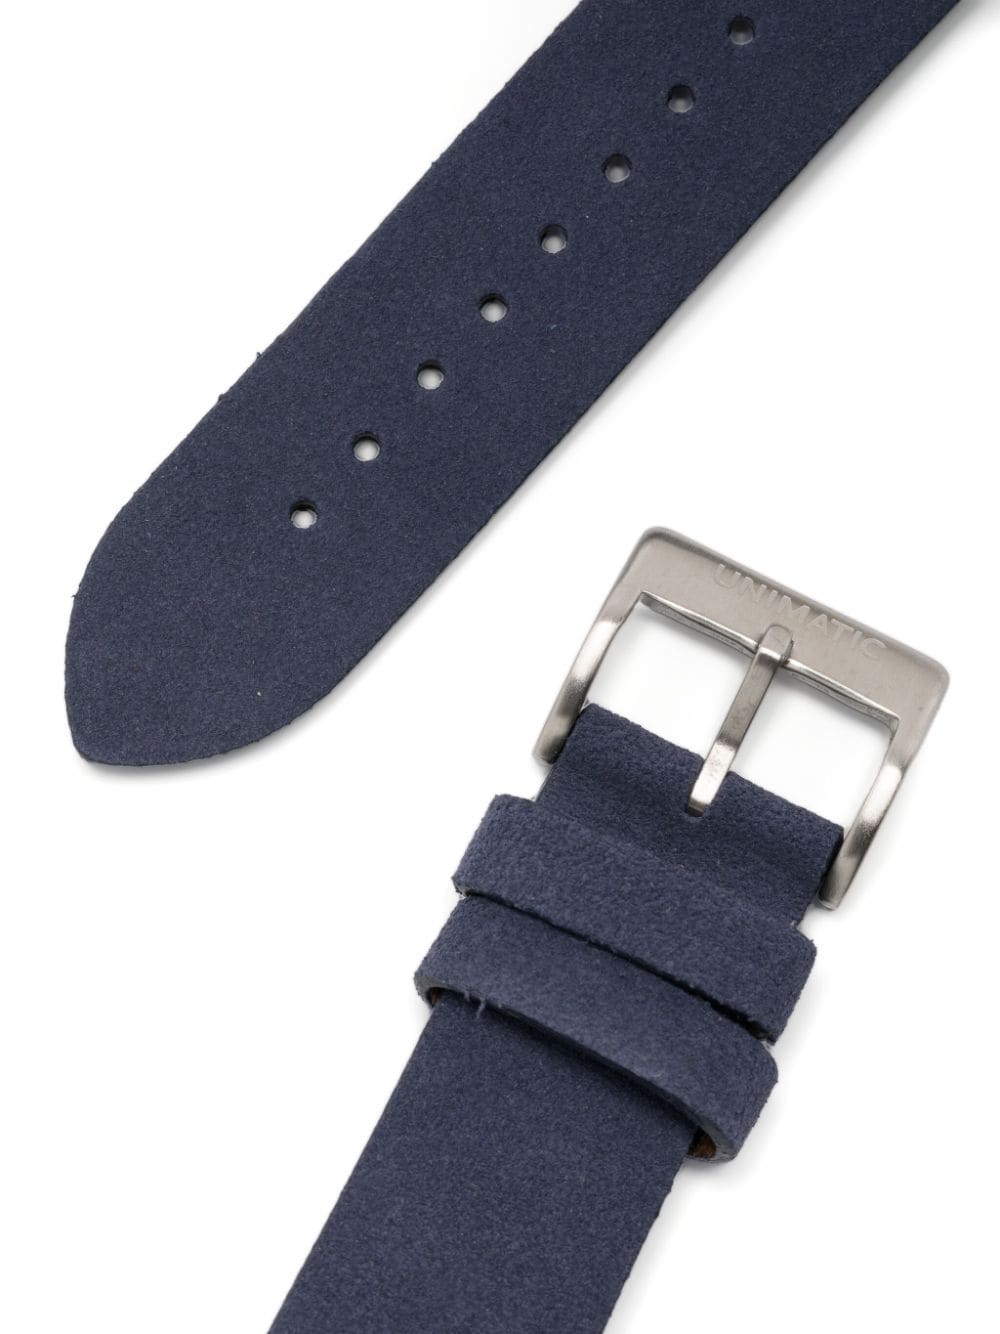 unimatic suede watch straps - Blauw